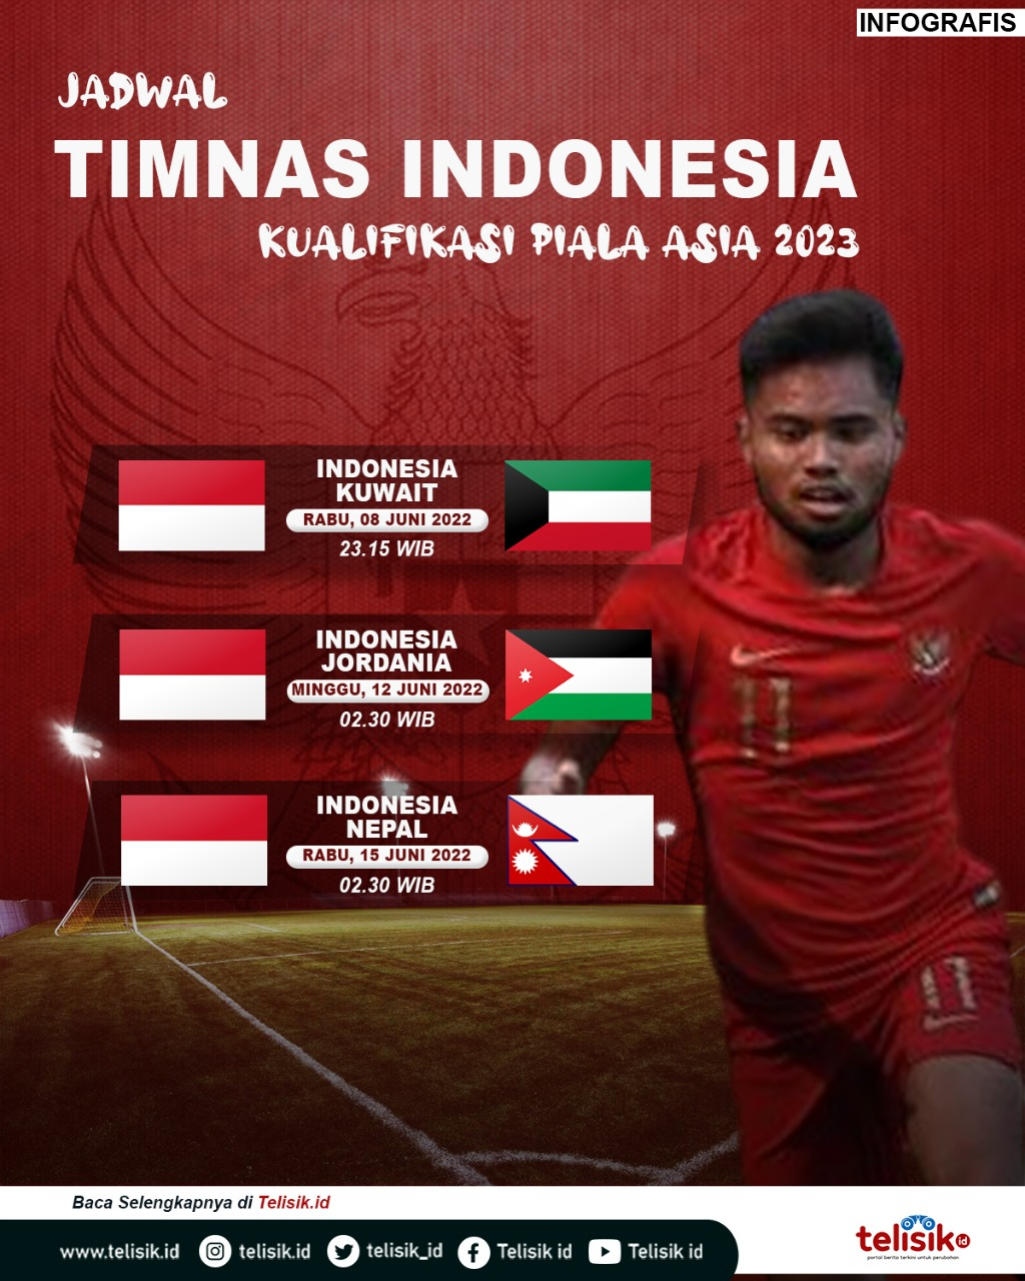 Infografis: Jadwal Timnas Indonesia Kualifikasi Piala Asia 2023